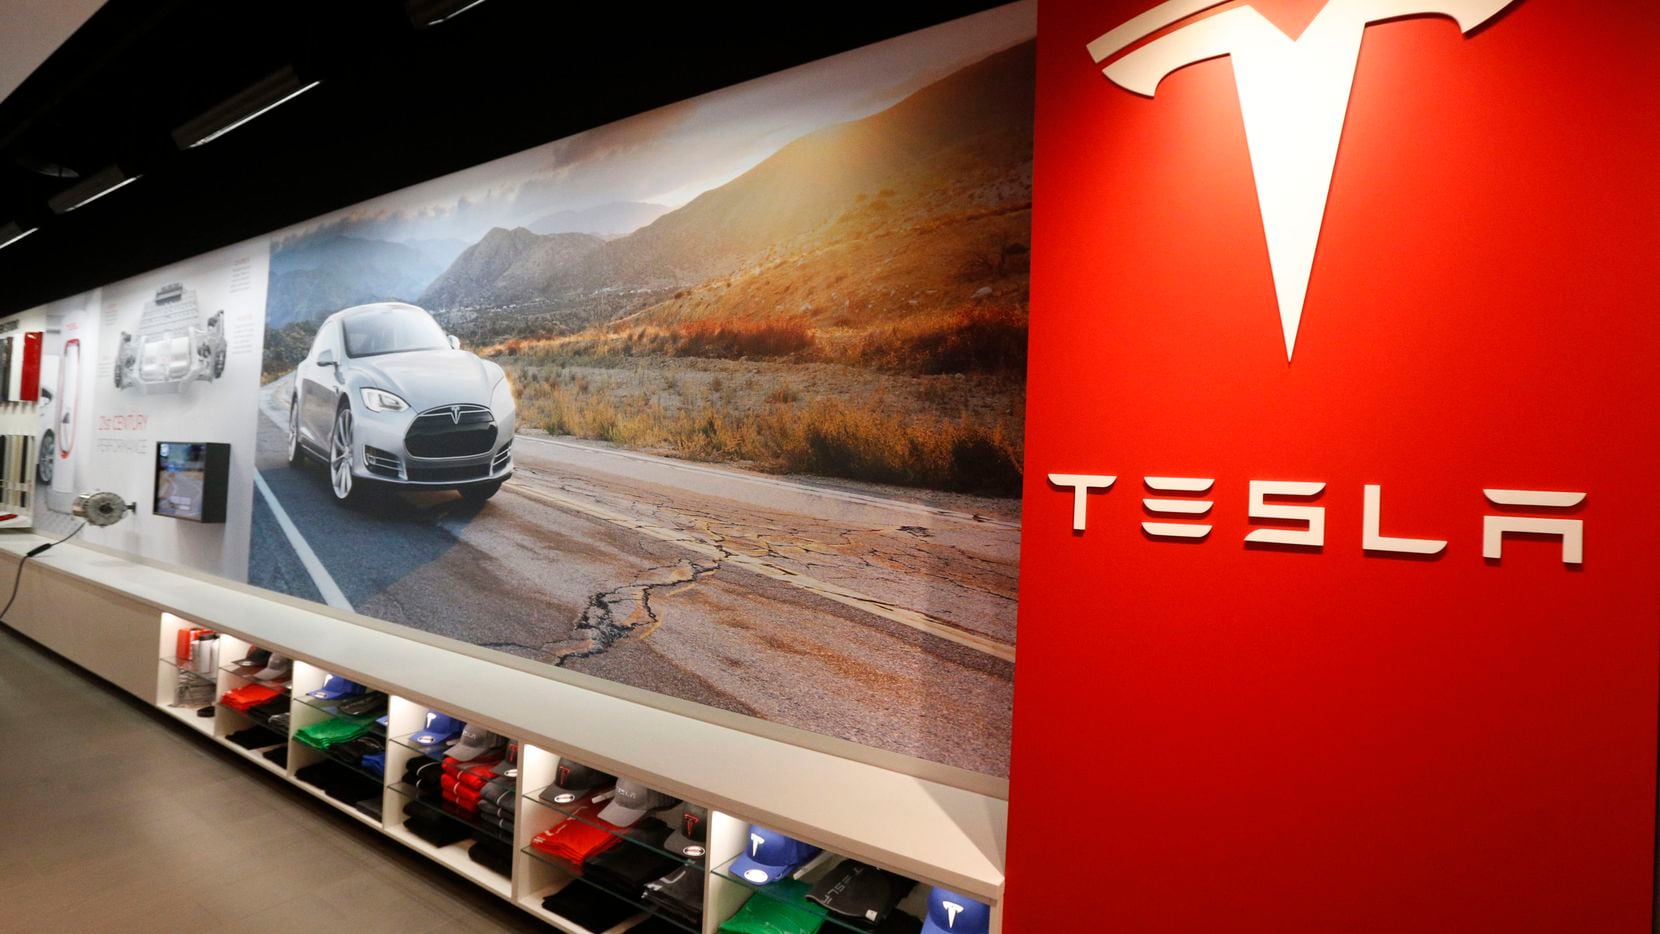 Tesla Motors' gallery at NorthPark Mall in Dallas.